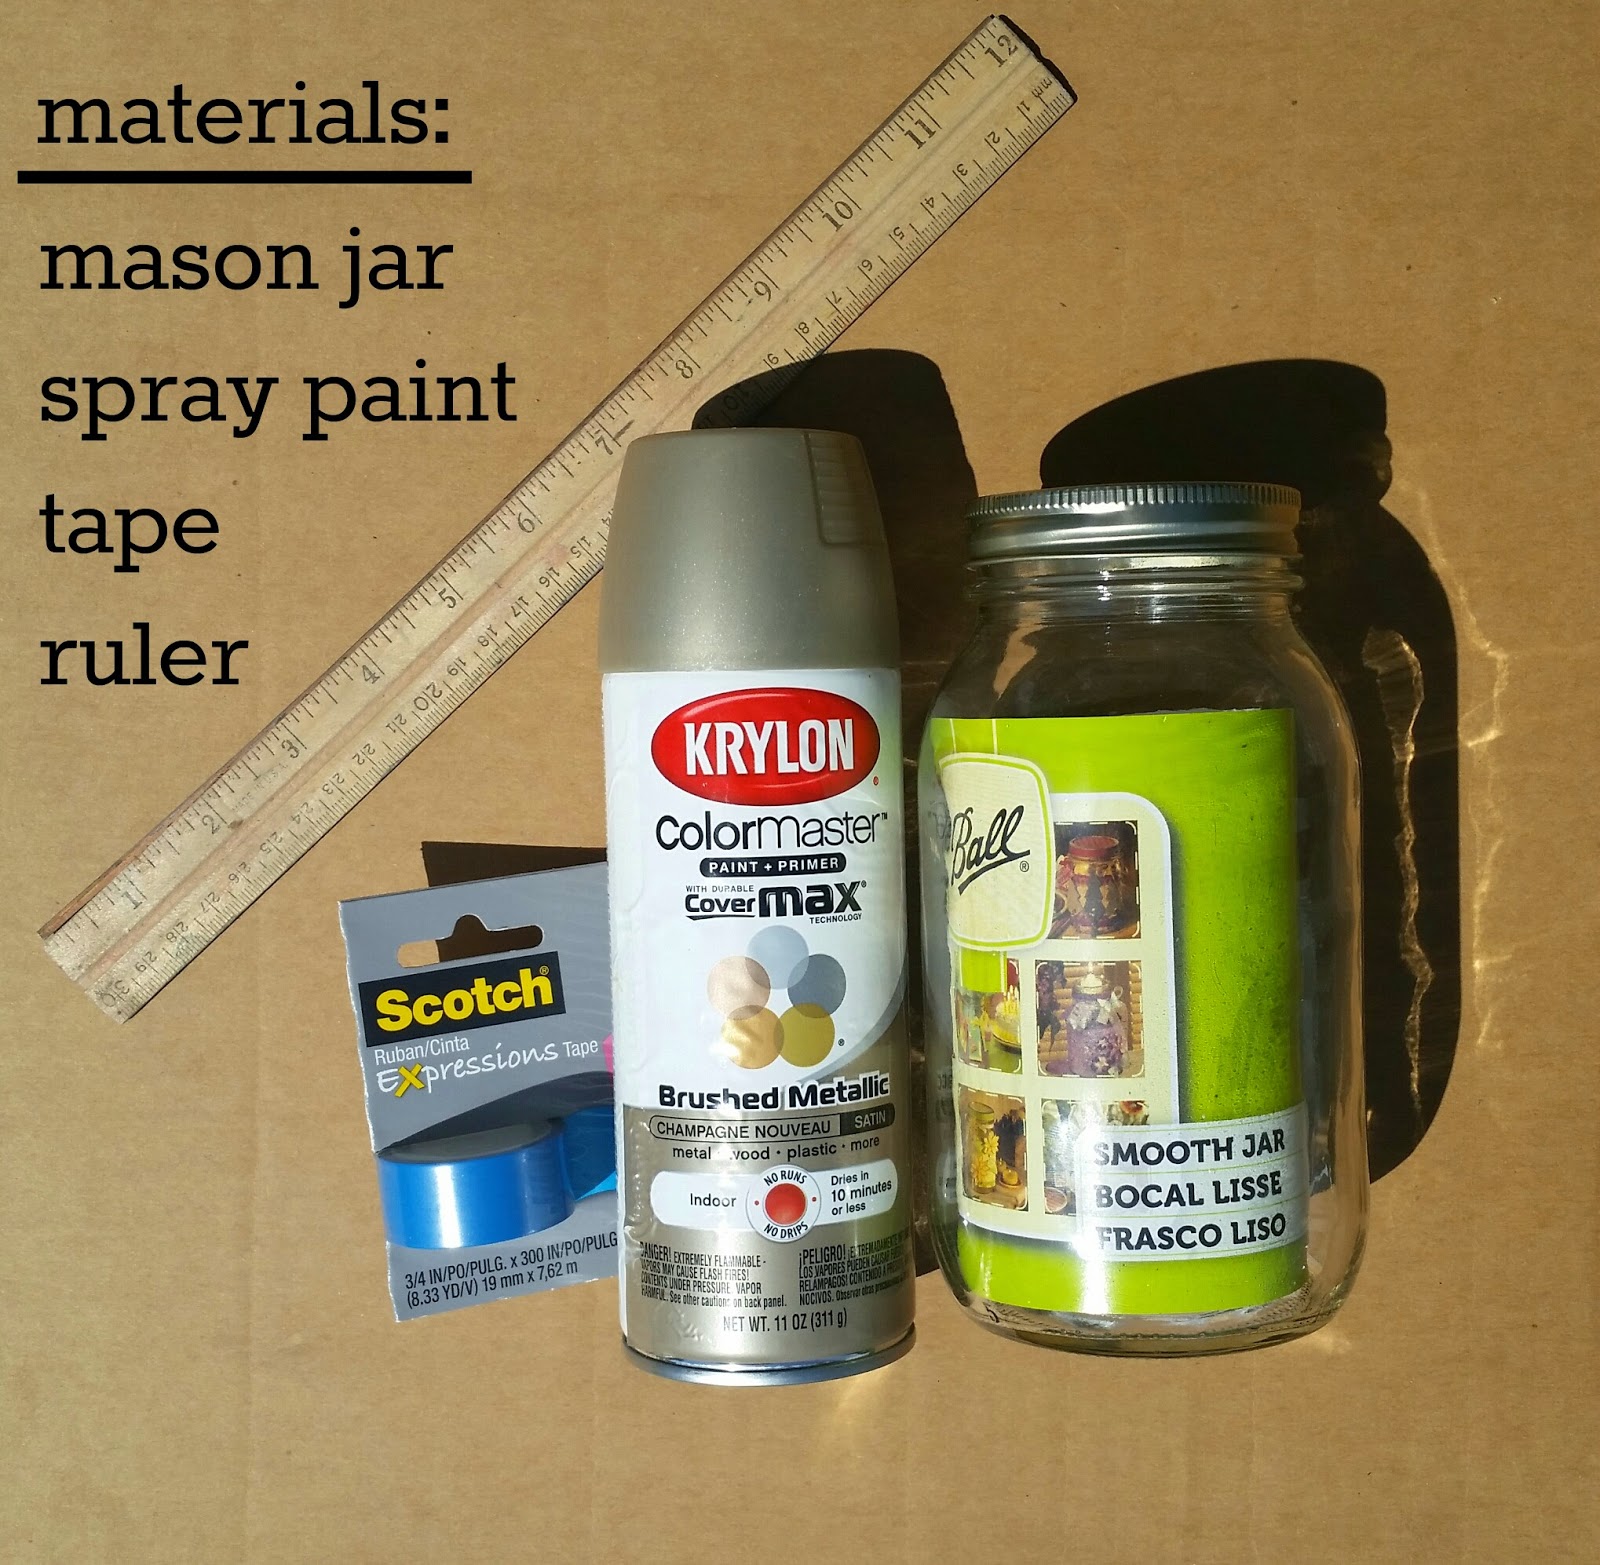 Striped Mason Jar Tutorial - jointhegossip.com